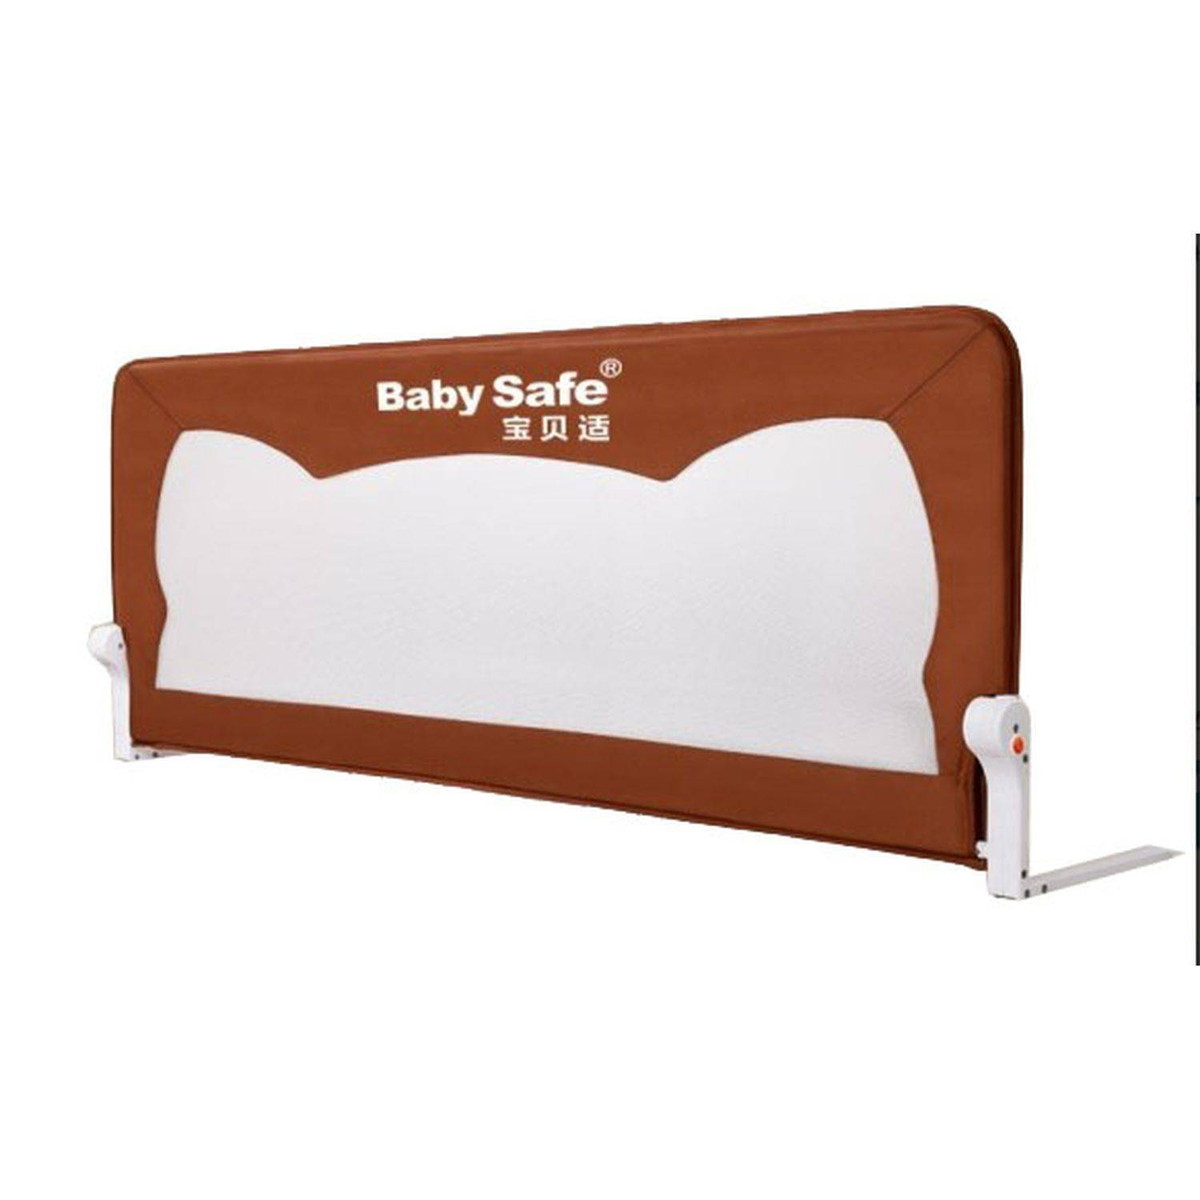 Барьер для кровати BabySafe Ушки 180х66 коричневый